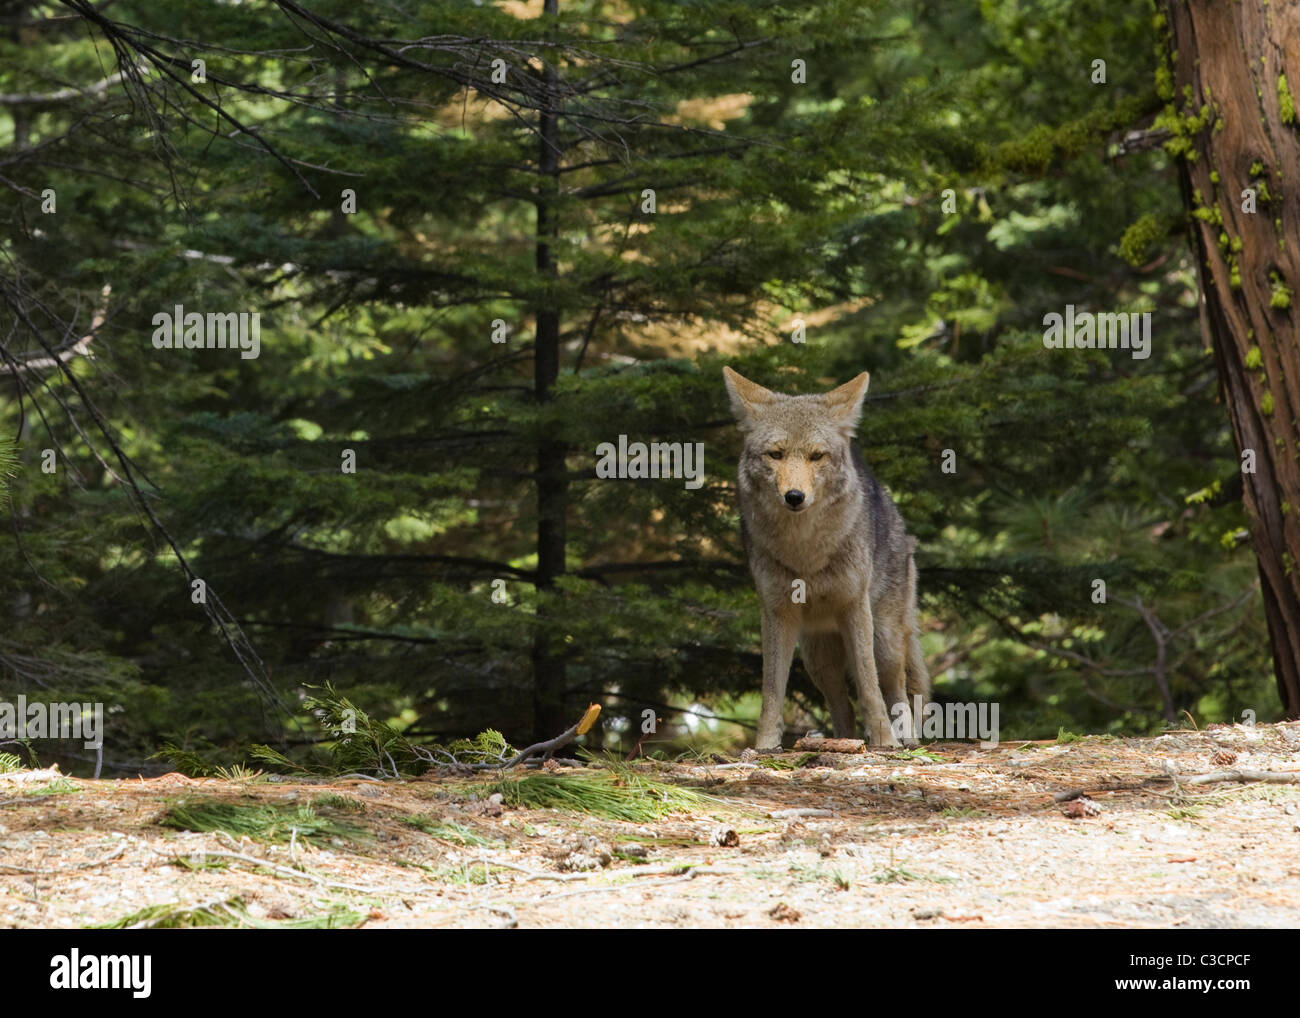 North American Mountain Kojote (Canis Latrans) am Rande des Waldes - Kalifornien USA Stockfoto